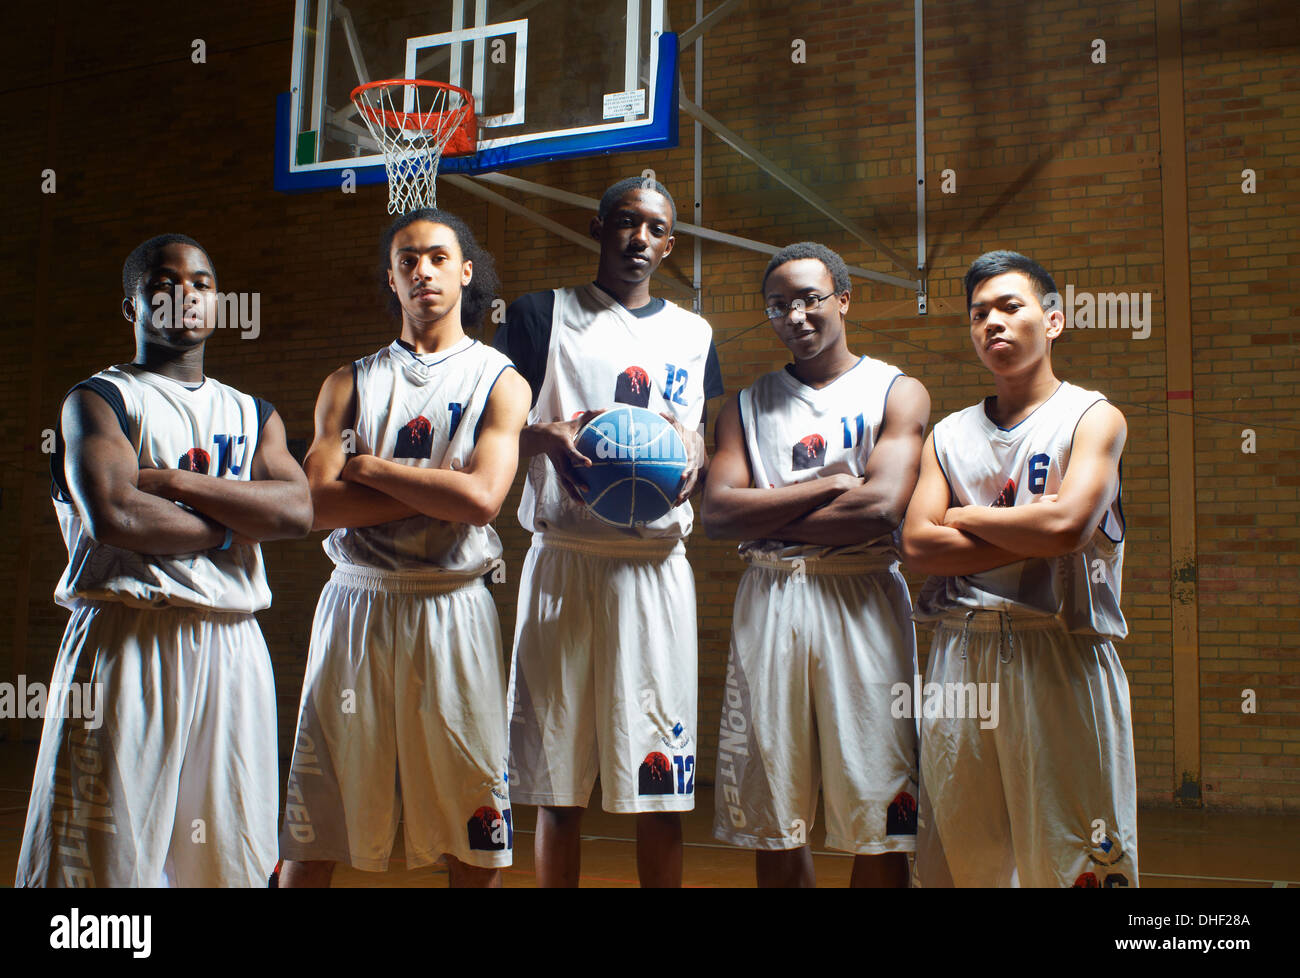 Equipo de baloncesto fotografías e imágenes de alta resolución - Alamy